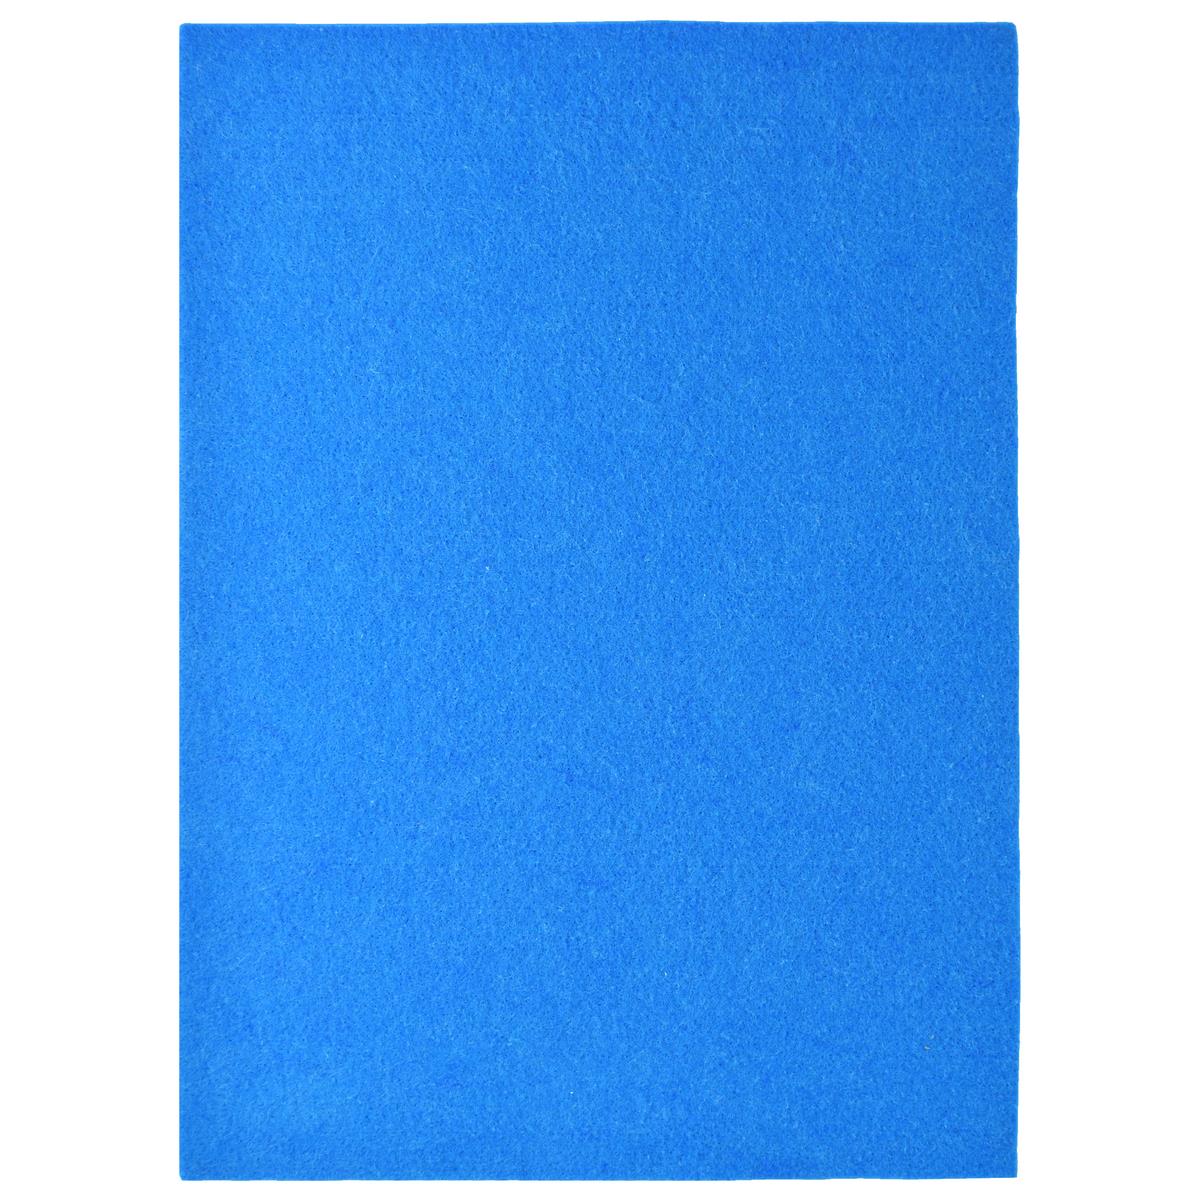 jags-mumbai Non-Woven & Felt Sheets A4 Nonwoven Felt Sheet 3 MM 1 Pcs Blue A4NF3MM-9